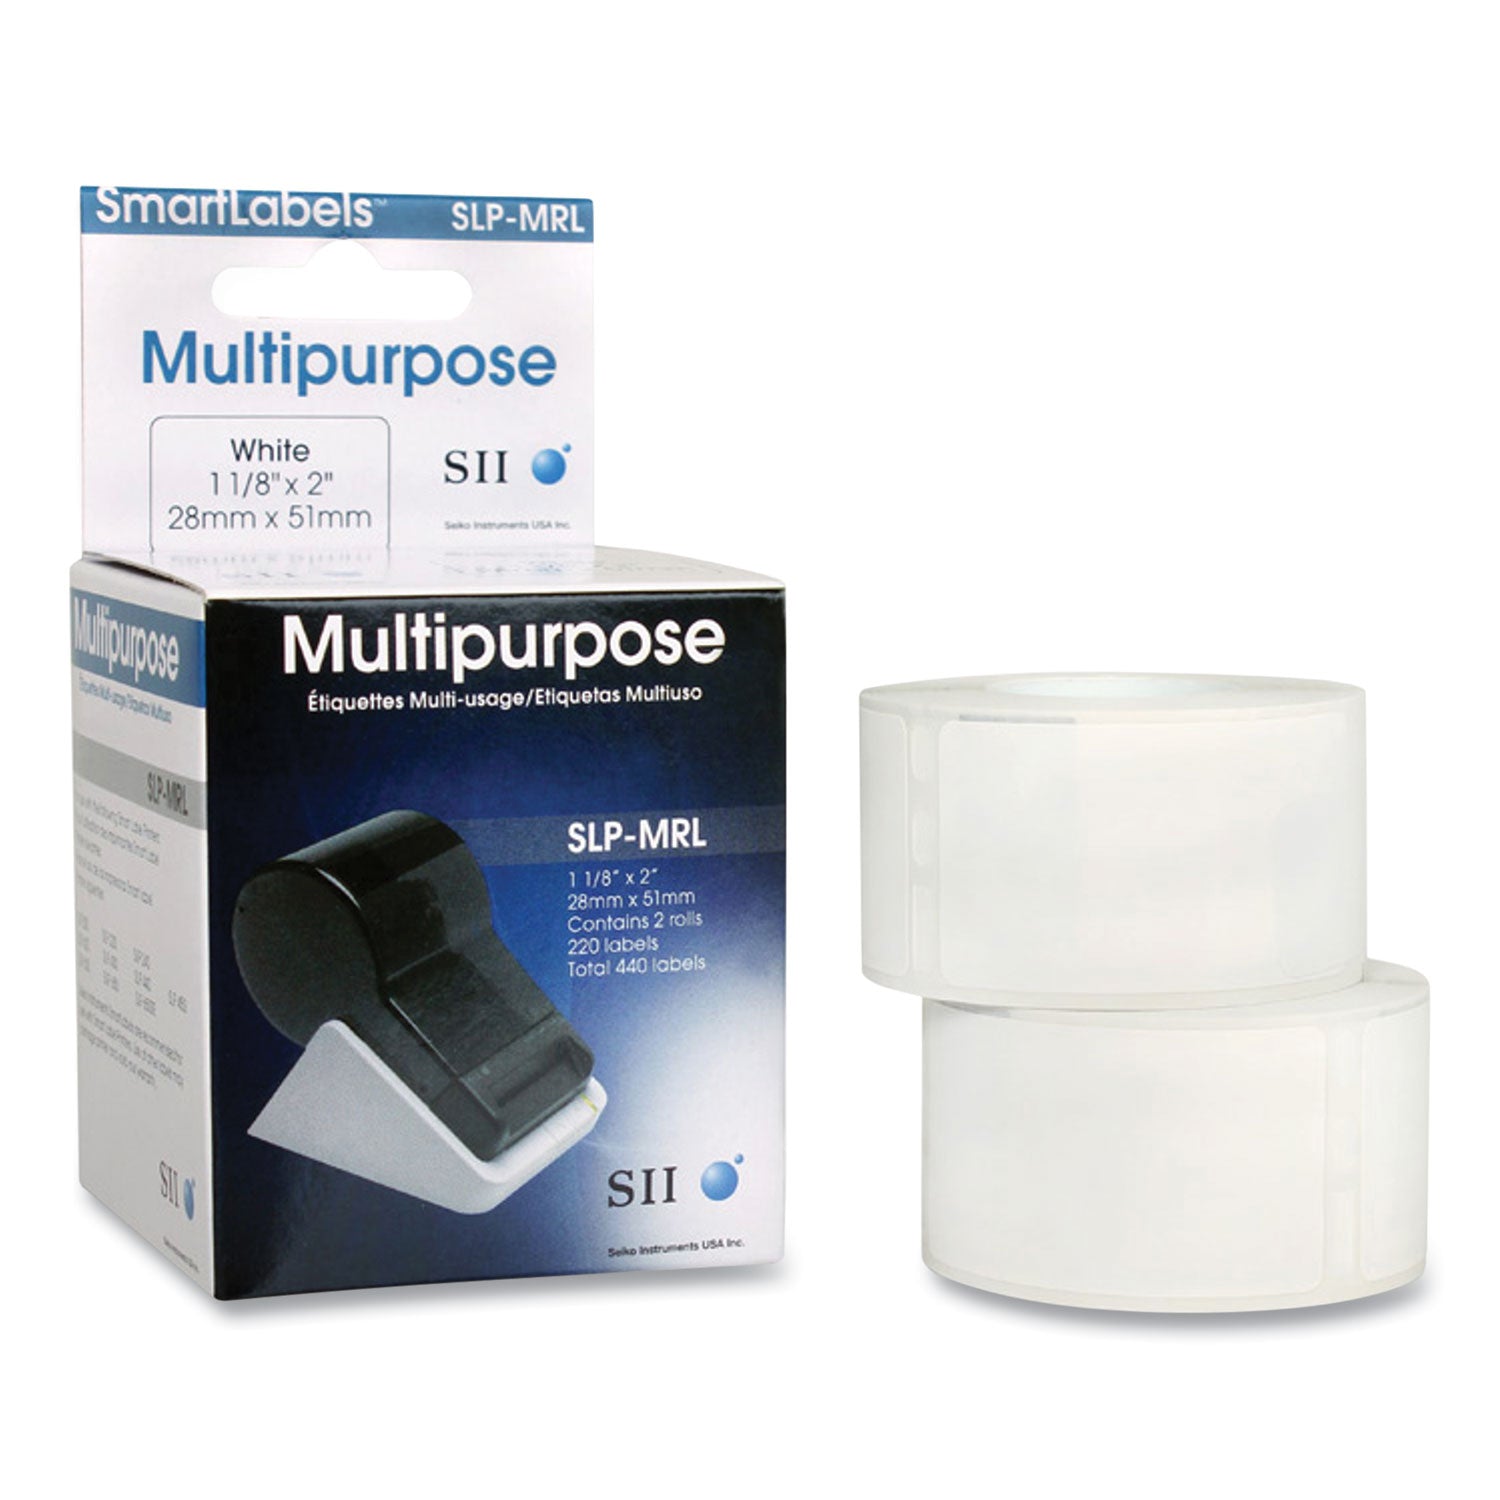 SLP-MRL Self-Adhesive Multipurpose Labels, 1.12" x 2", White, 220 Labels/Roll, 2 Rolls/Box - 